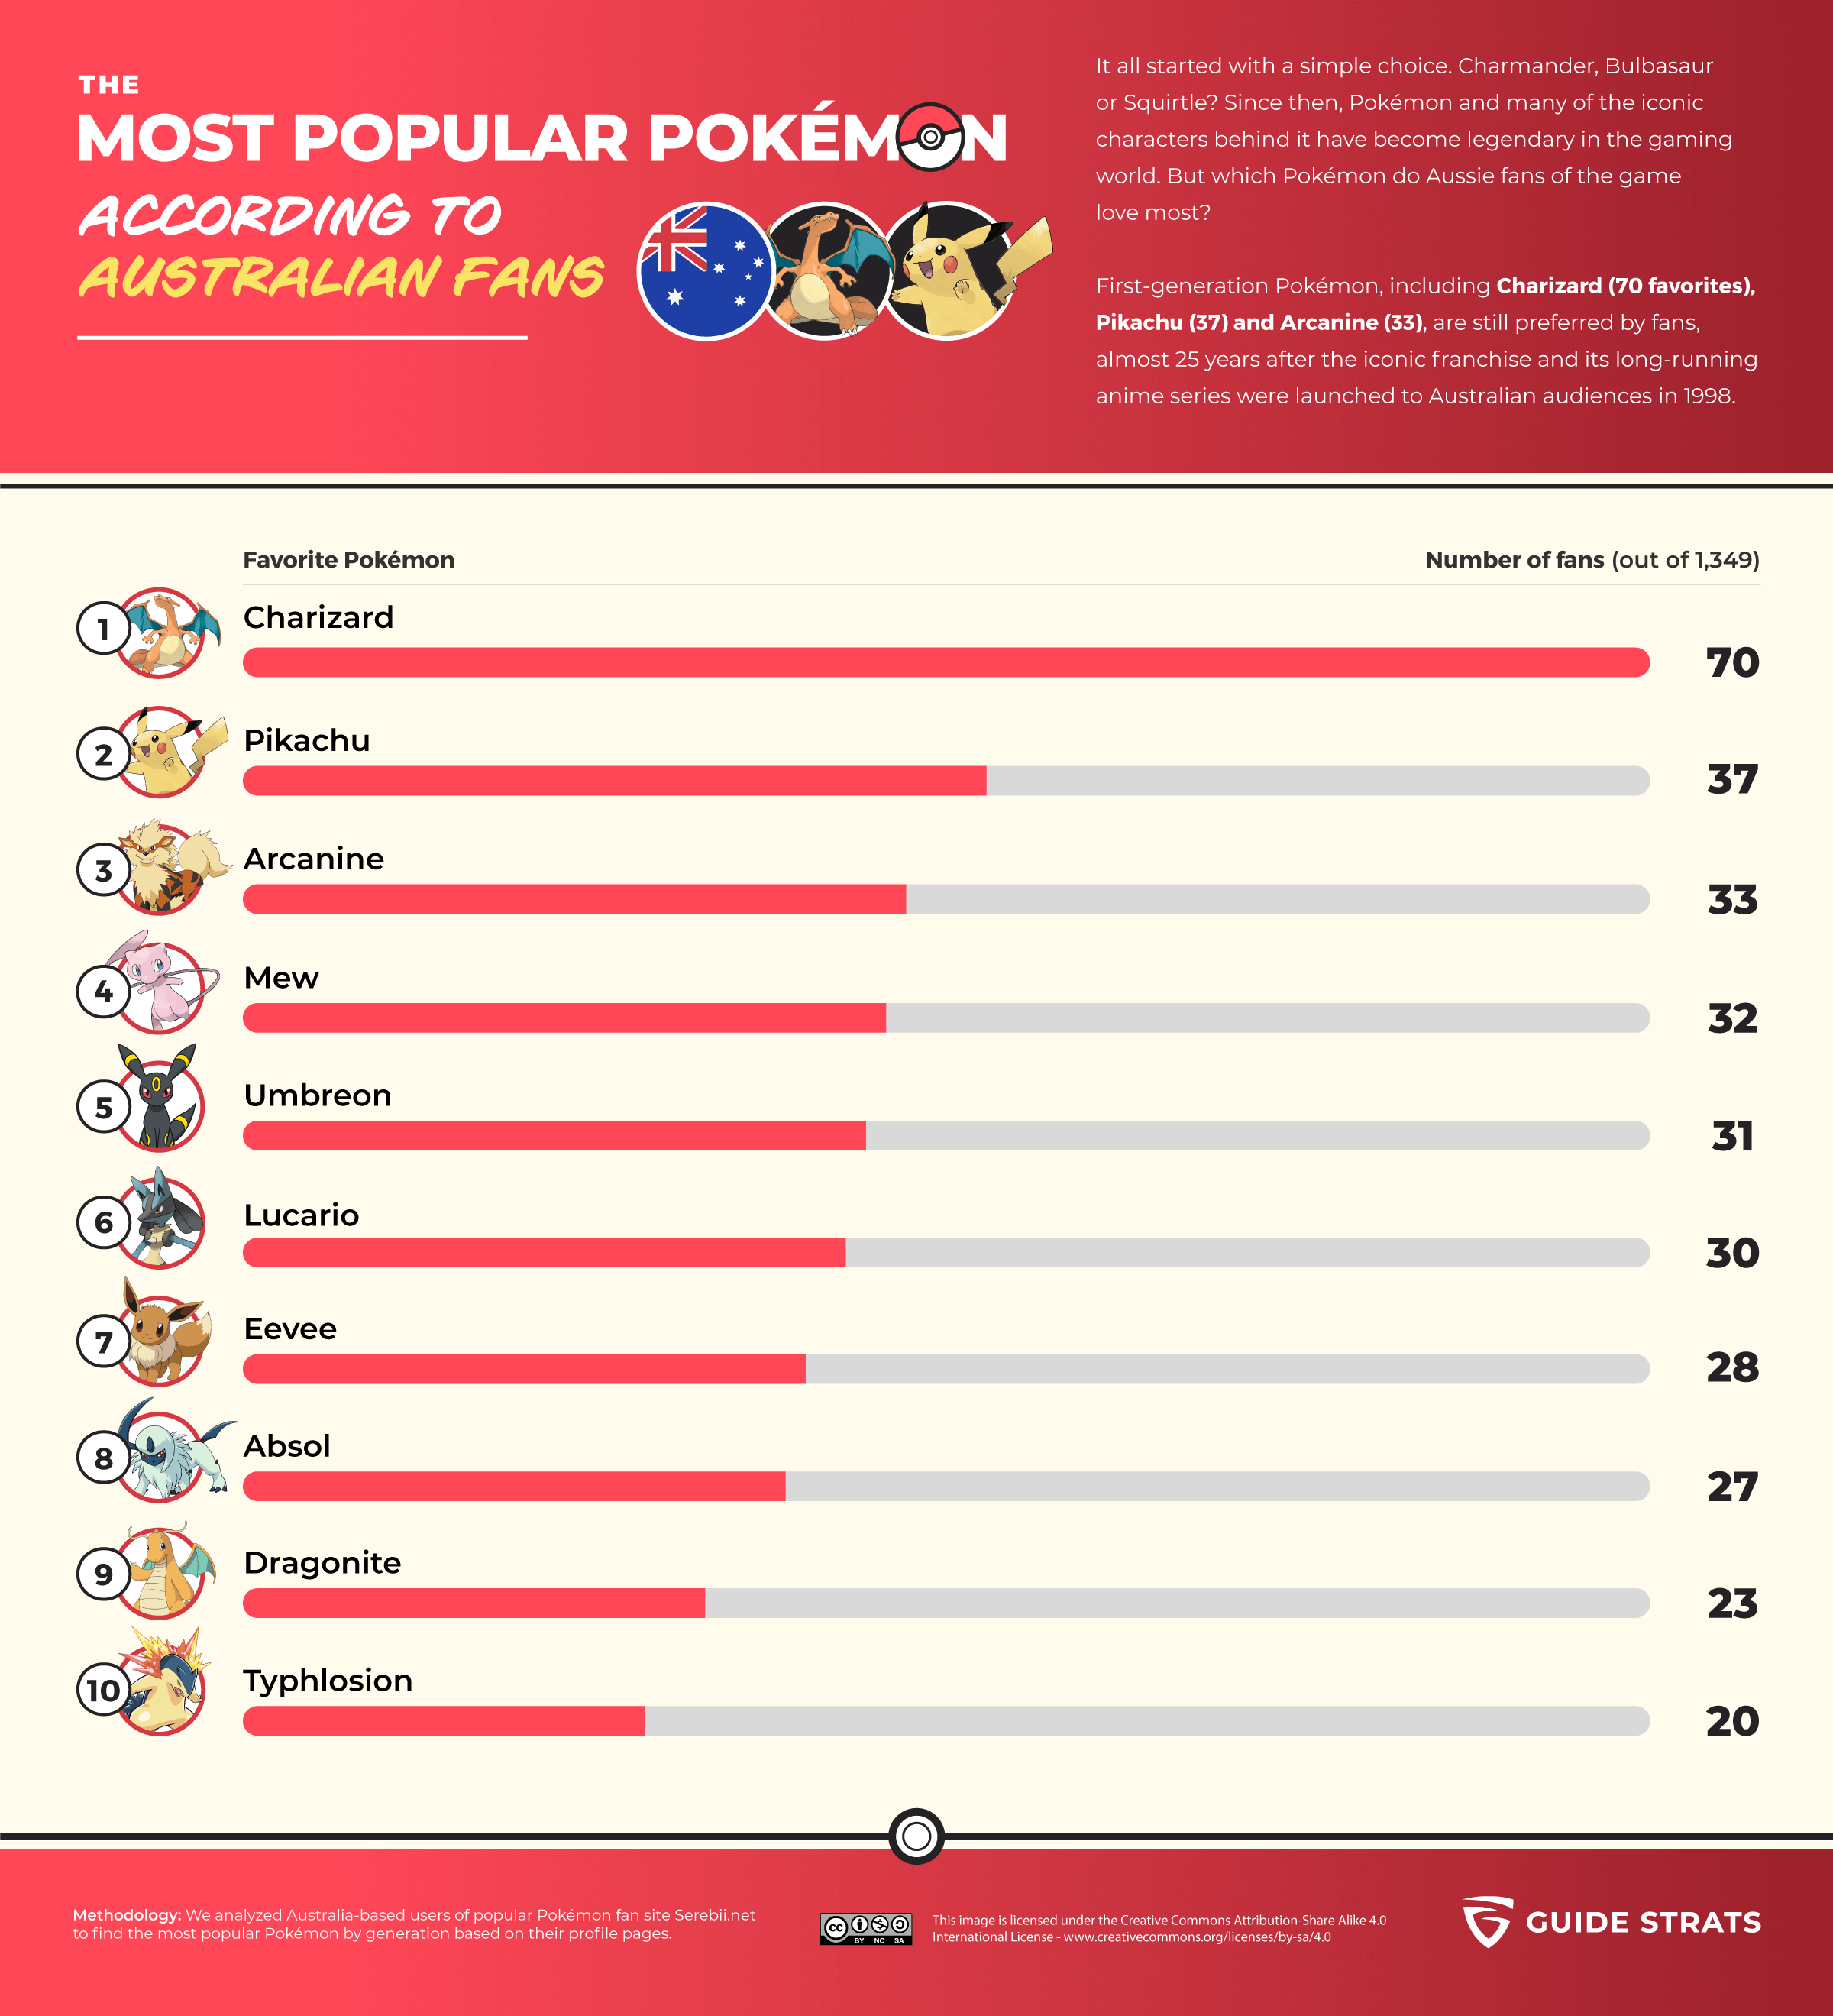 The most popular Pokemon, according to Australian fans